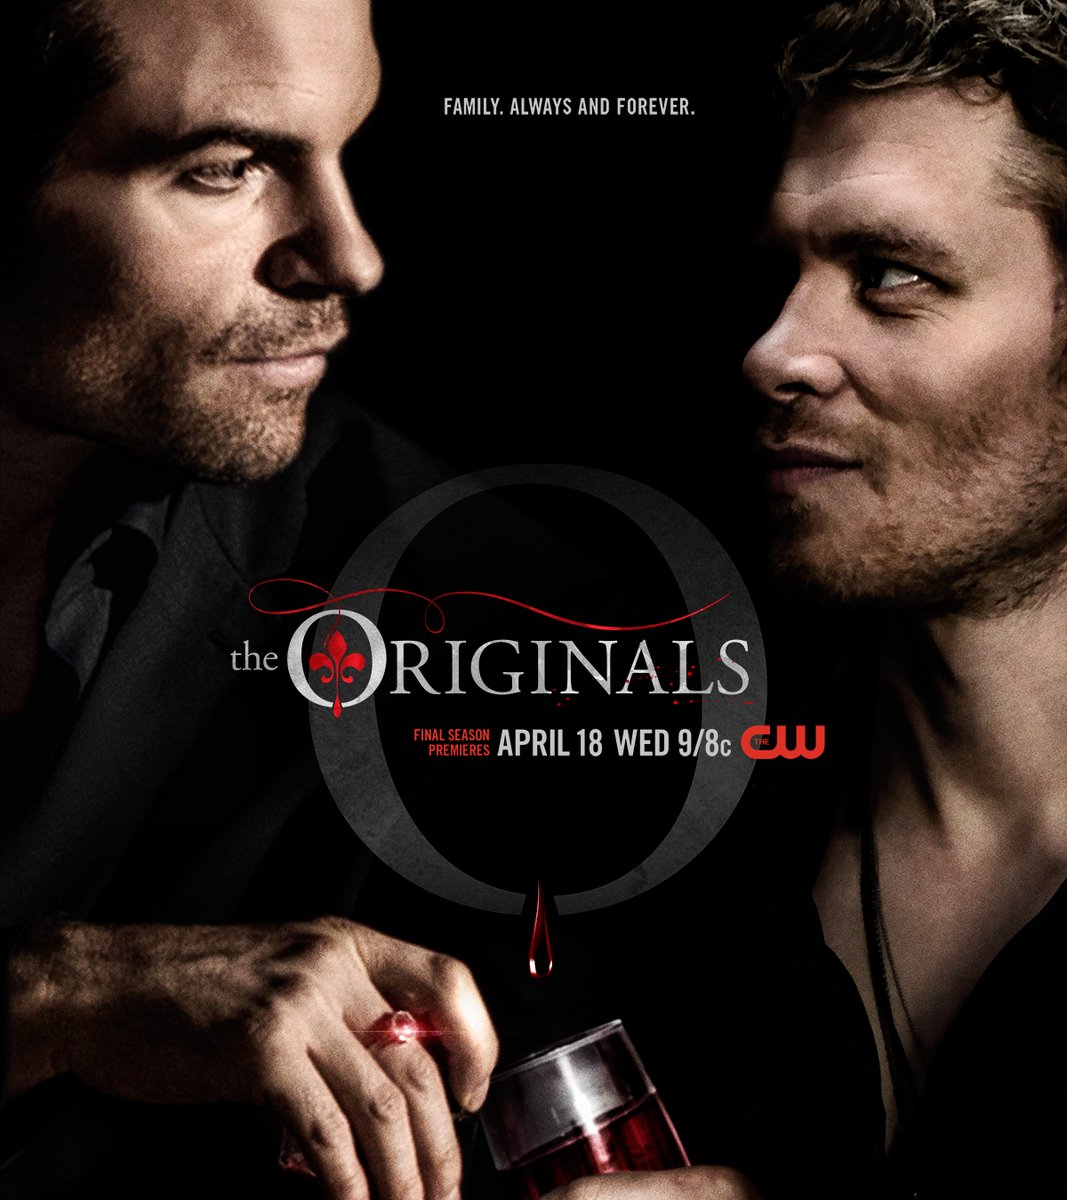 The Originals The Devil Is Damned (TV Episode 2015) - IMDb